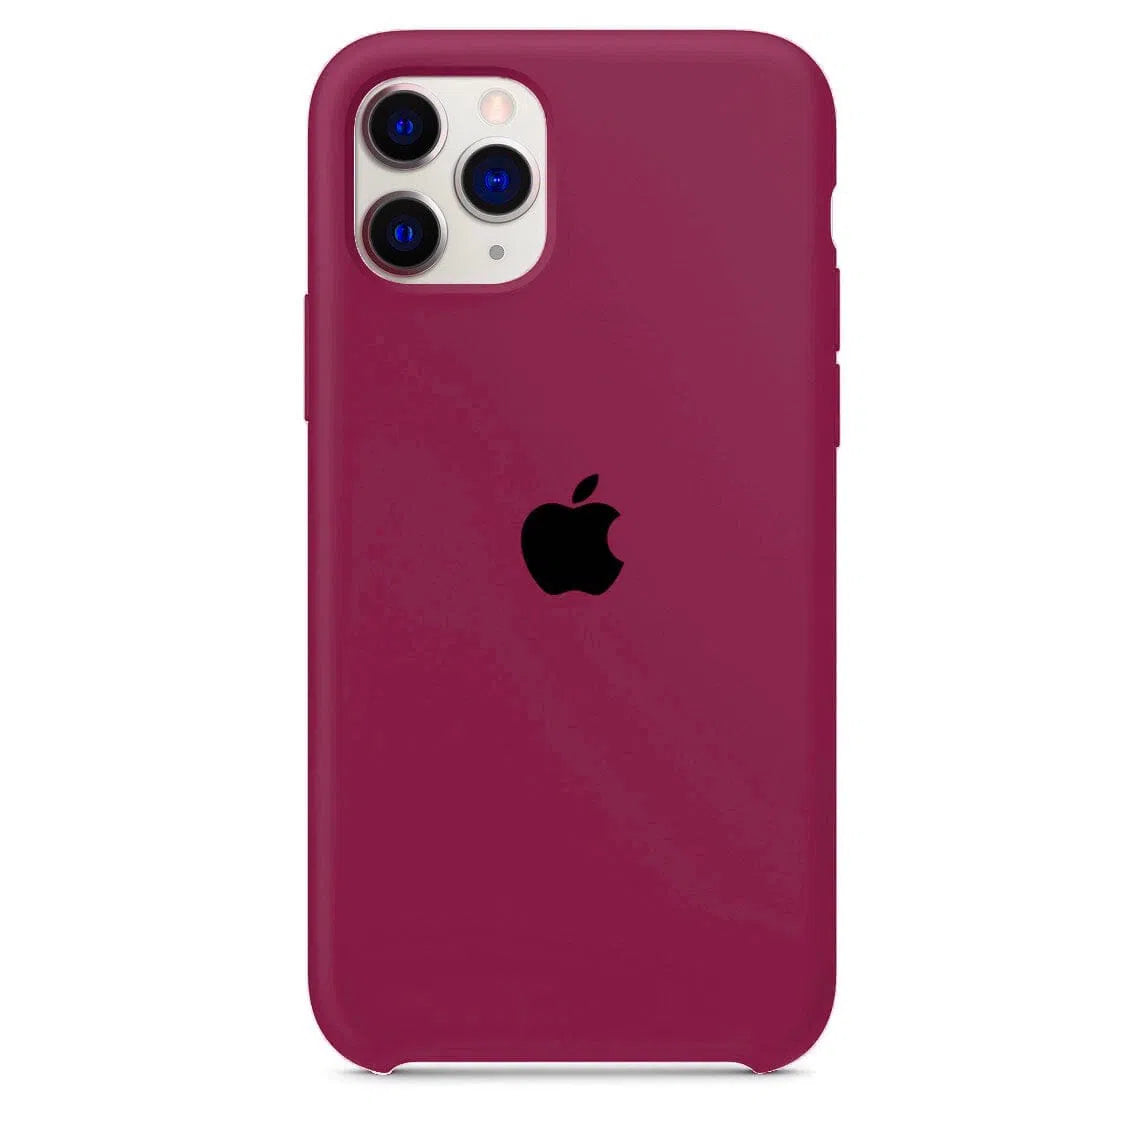 Husa iPhone Silicone Case Dark Rose (Burgundy) Anca's Store 11 Pro 